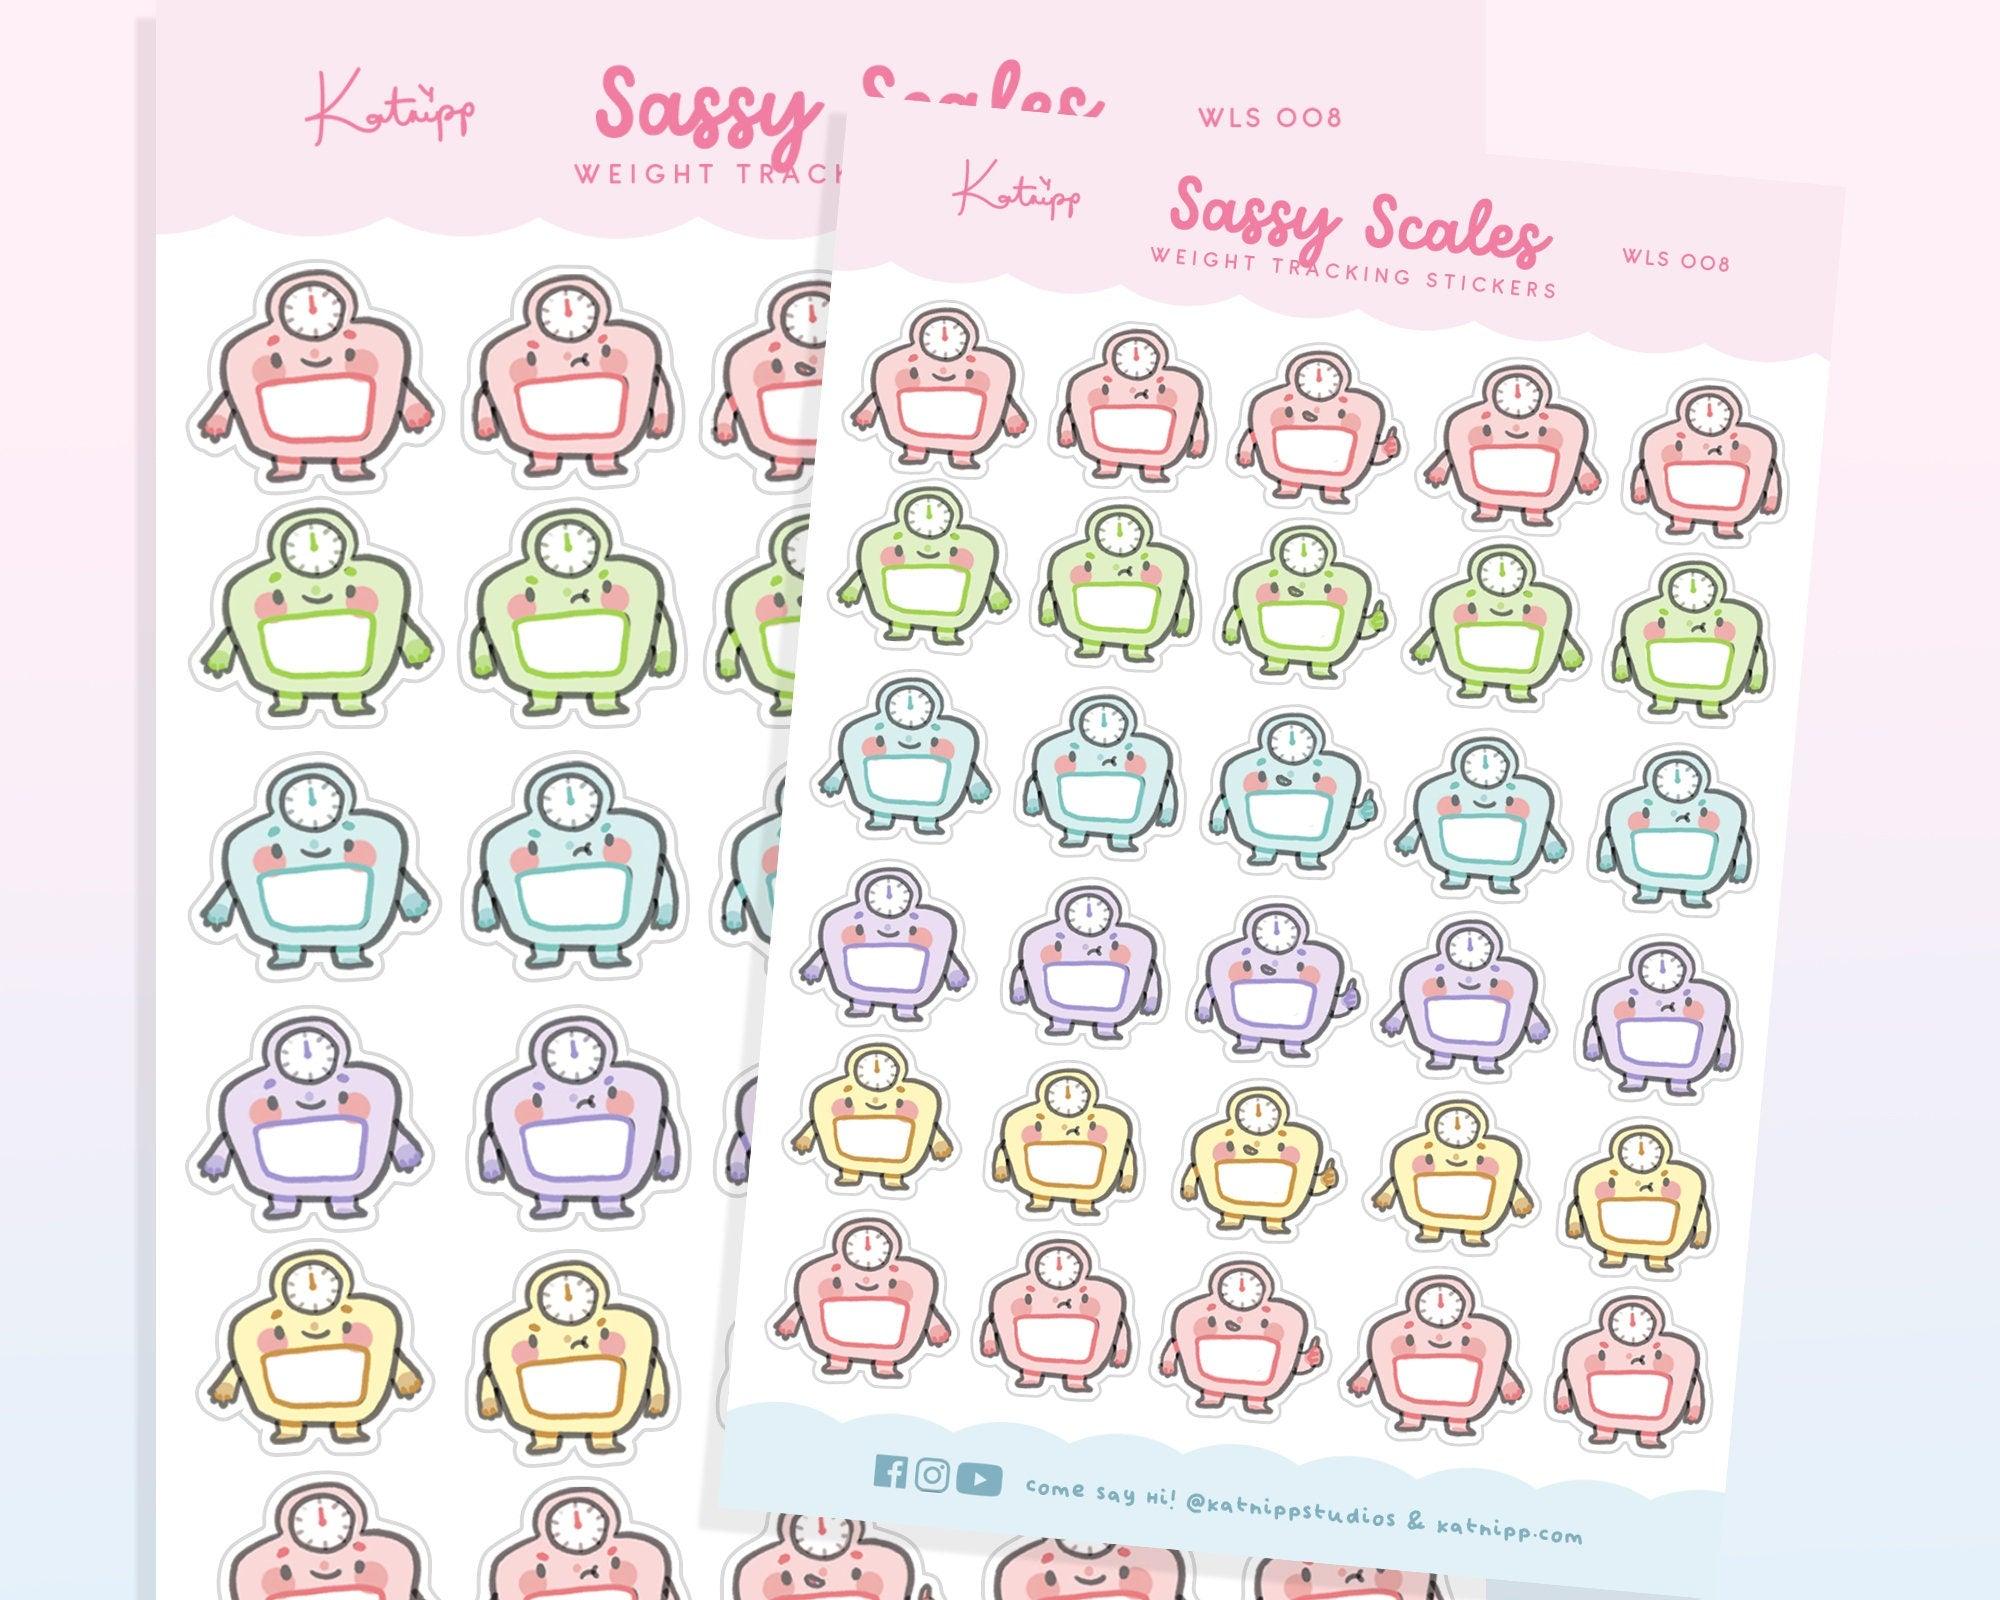 Teeny Tiny Stickers – PrettyCutePlanner